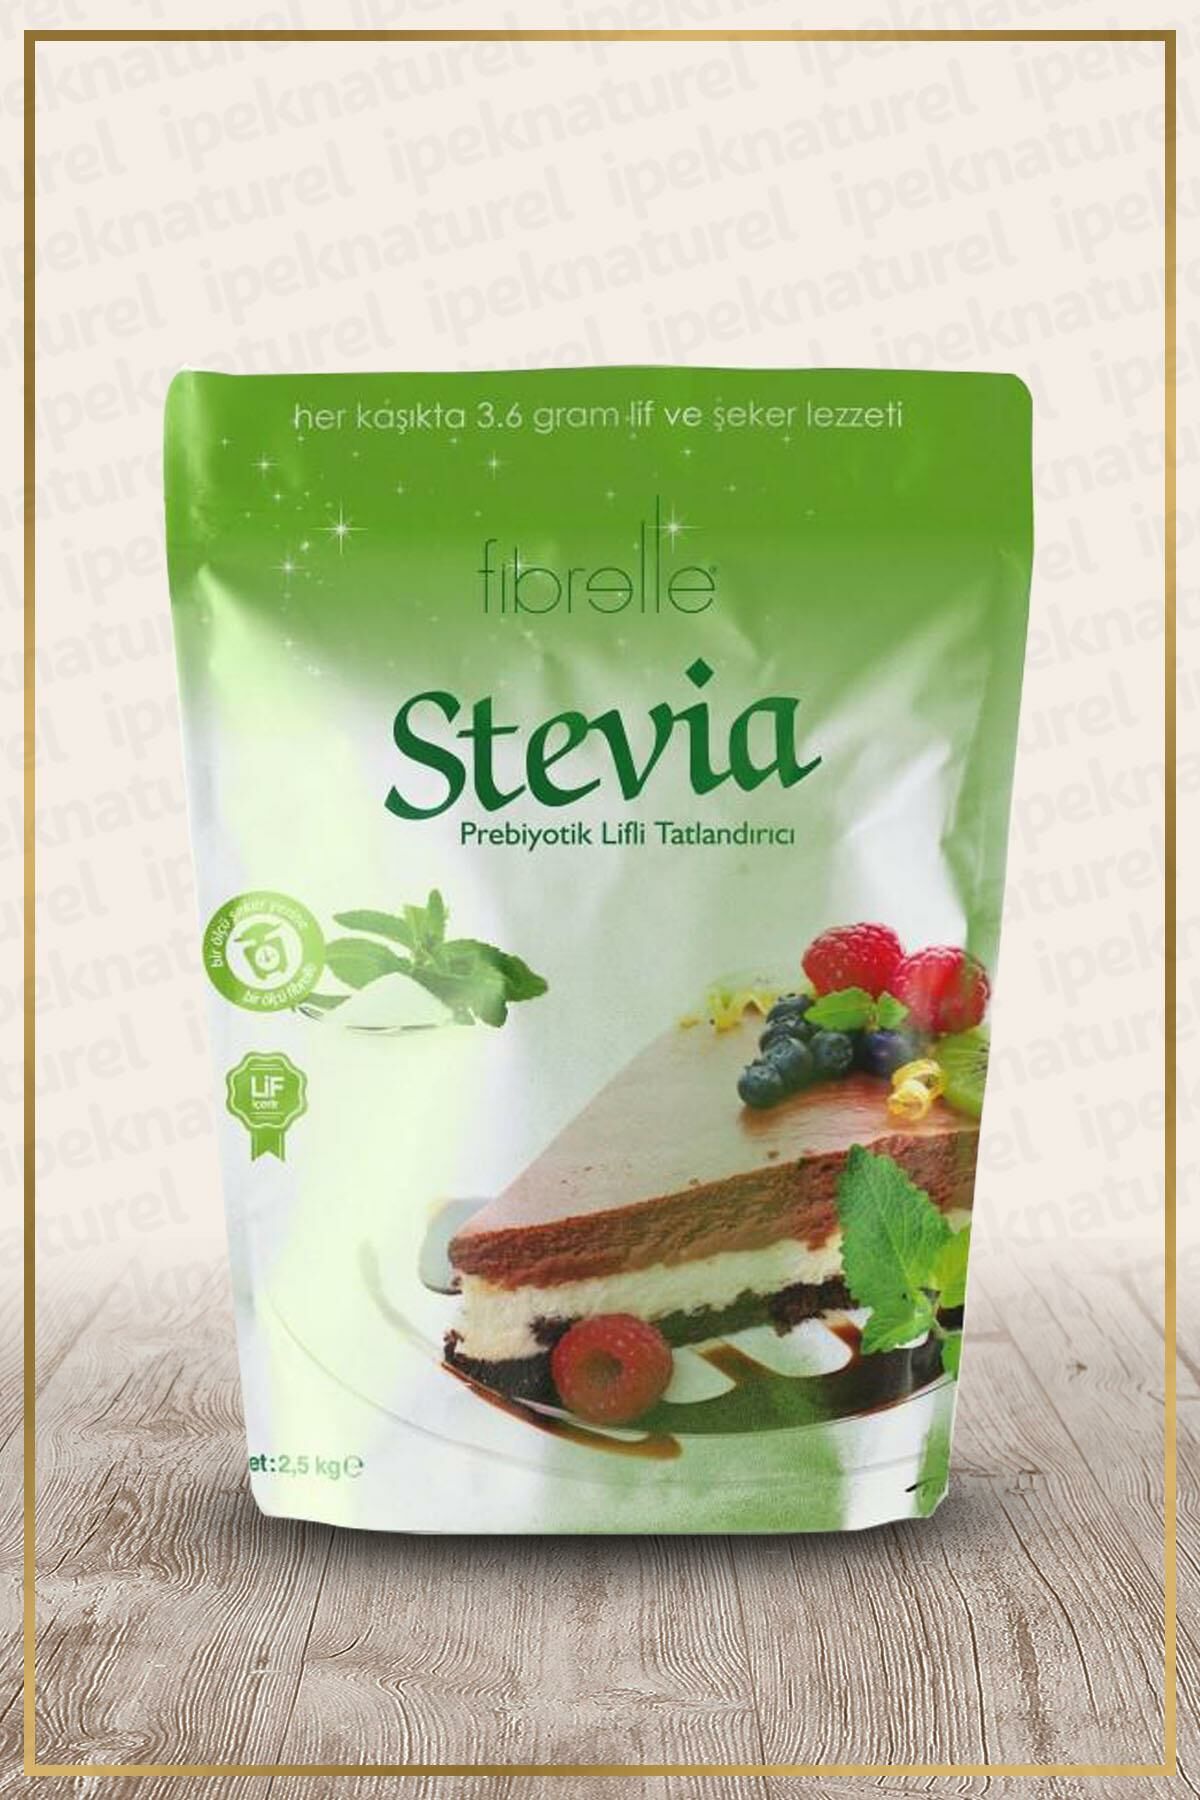 Fibrelle Stevia Probiyotik Lifli Tatlandırıcı 400 gr